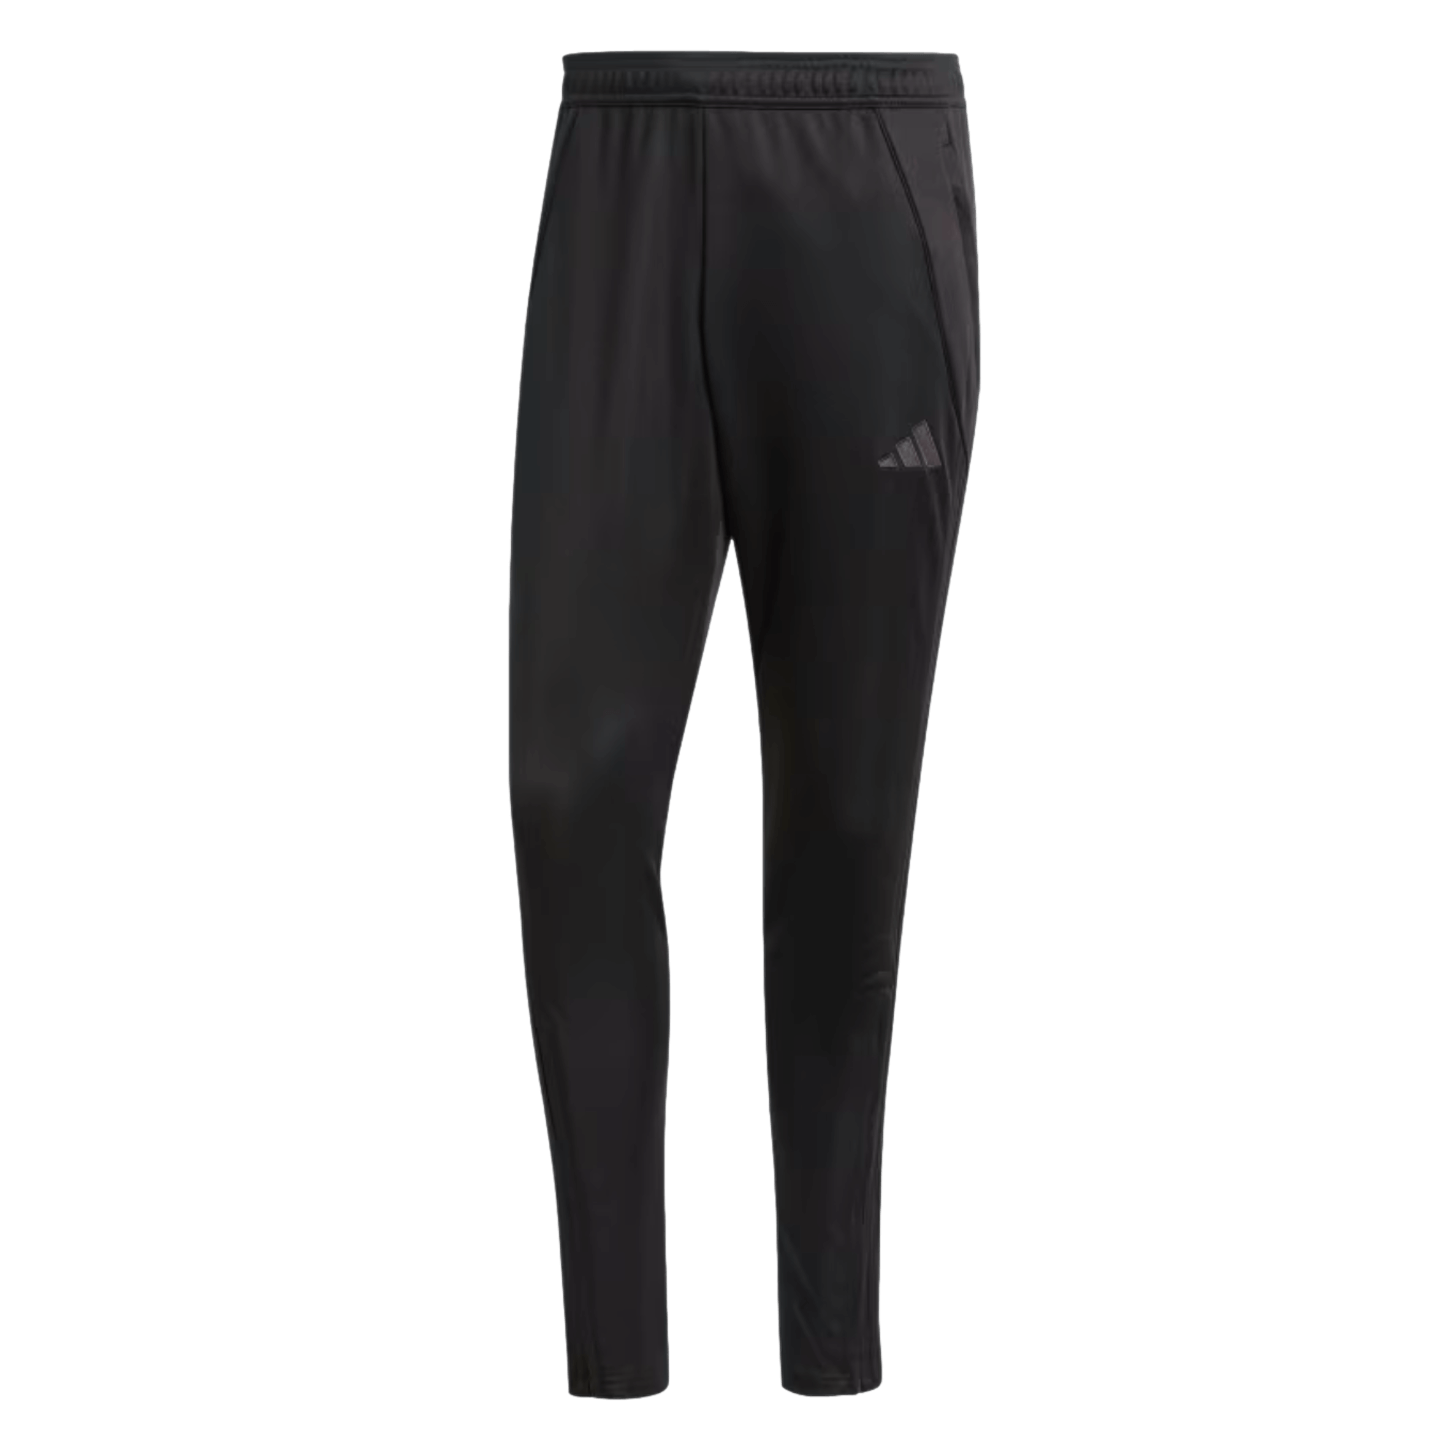 Adidas YOUTH TIR017 Climacool Soccer Sweat Pants Black Pink CF1149